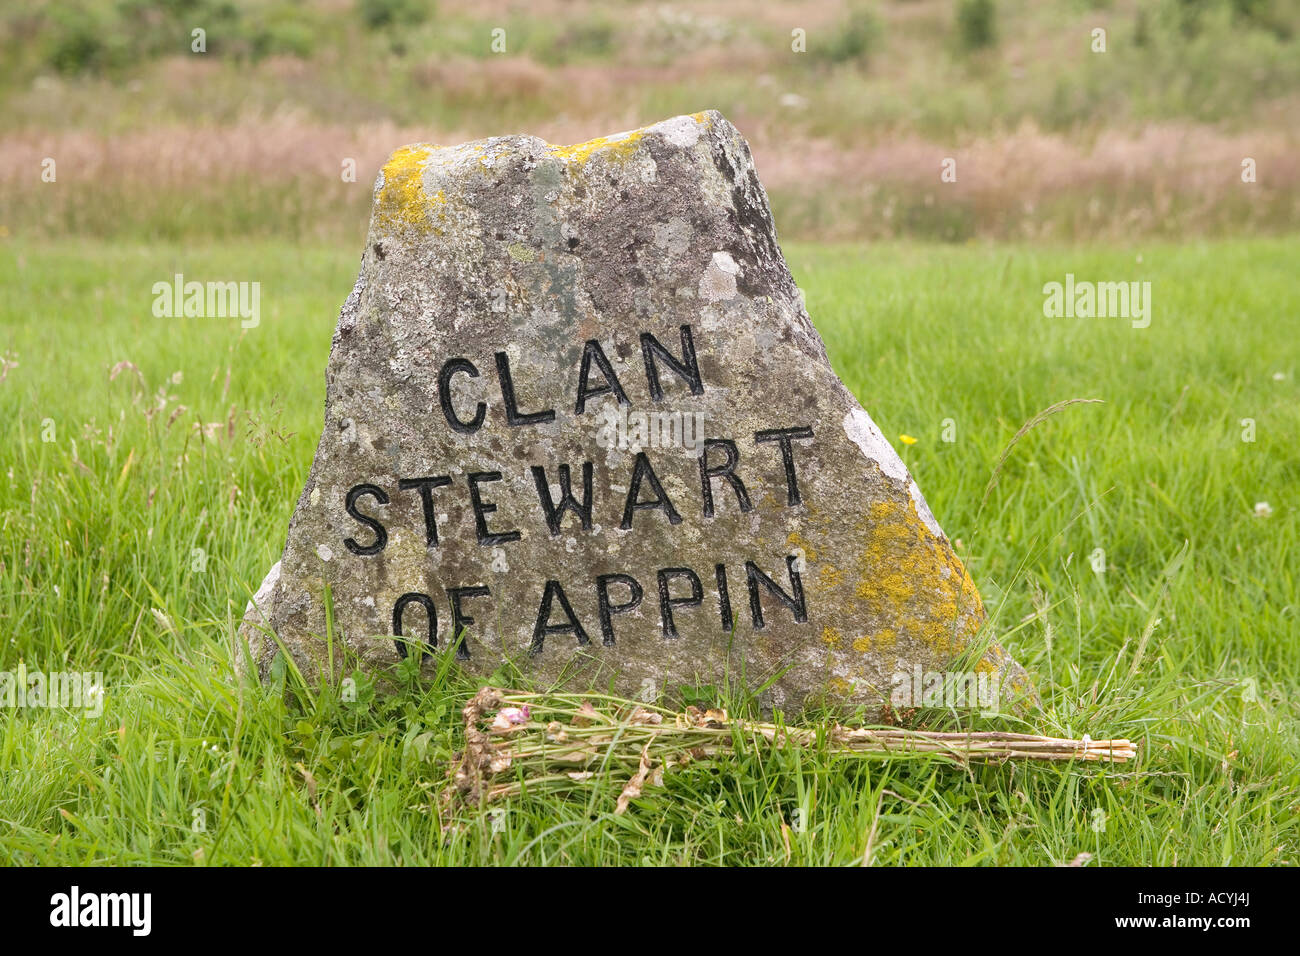 Scotland. Highlands. Culloden battlefield grave of Clan Stewart of Appin Stock Photo